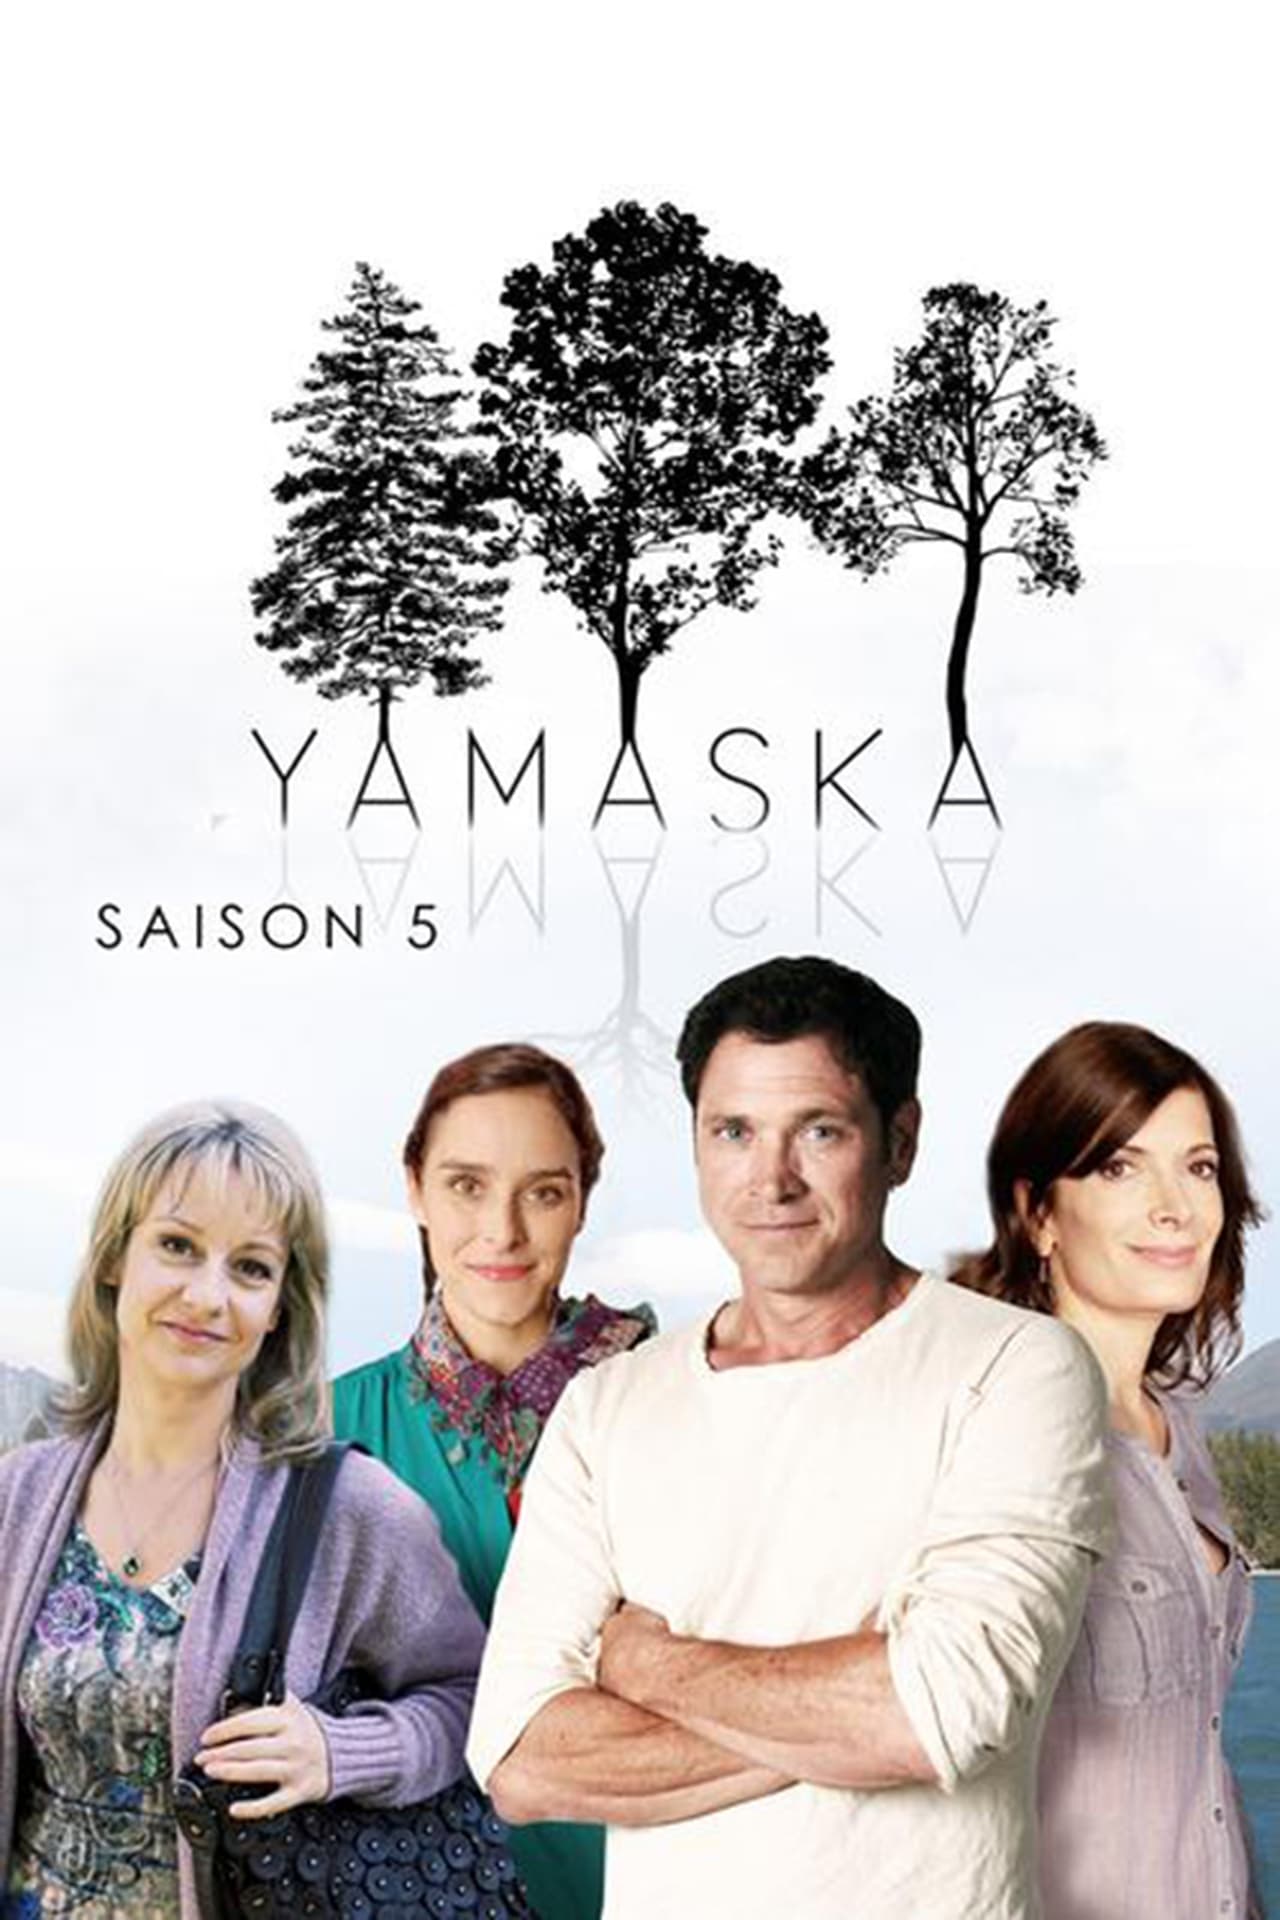 Yamaska Season 5